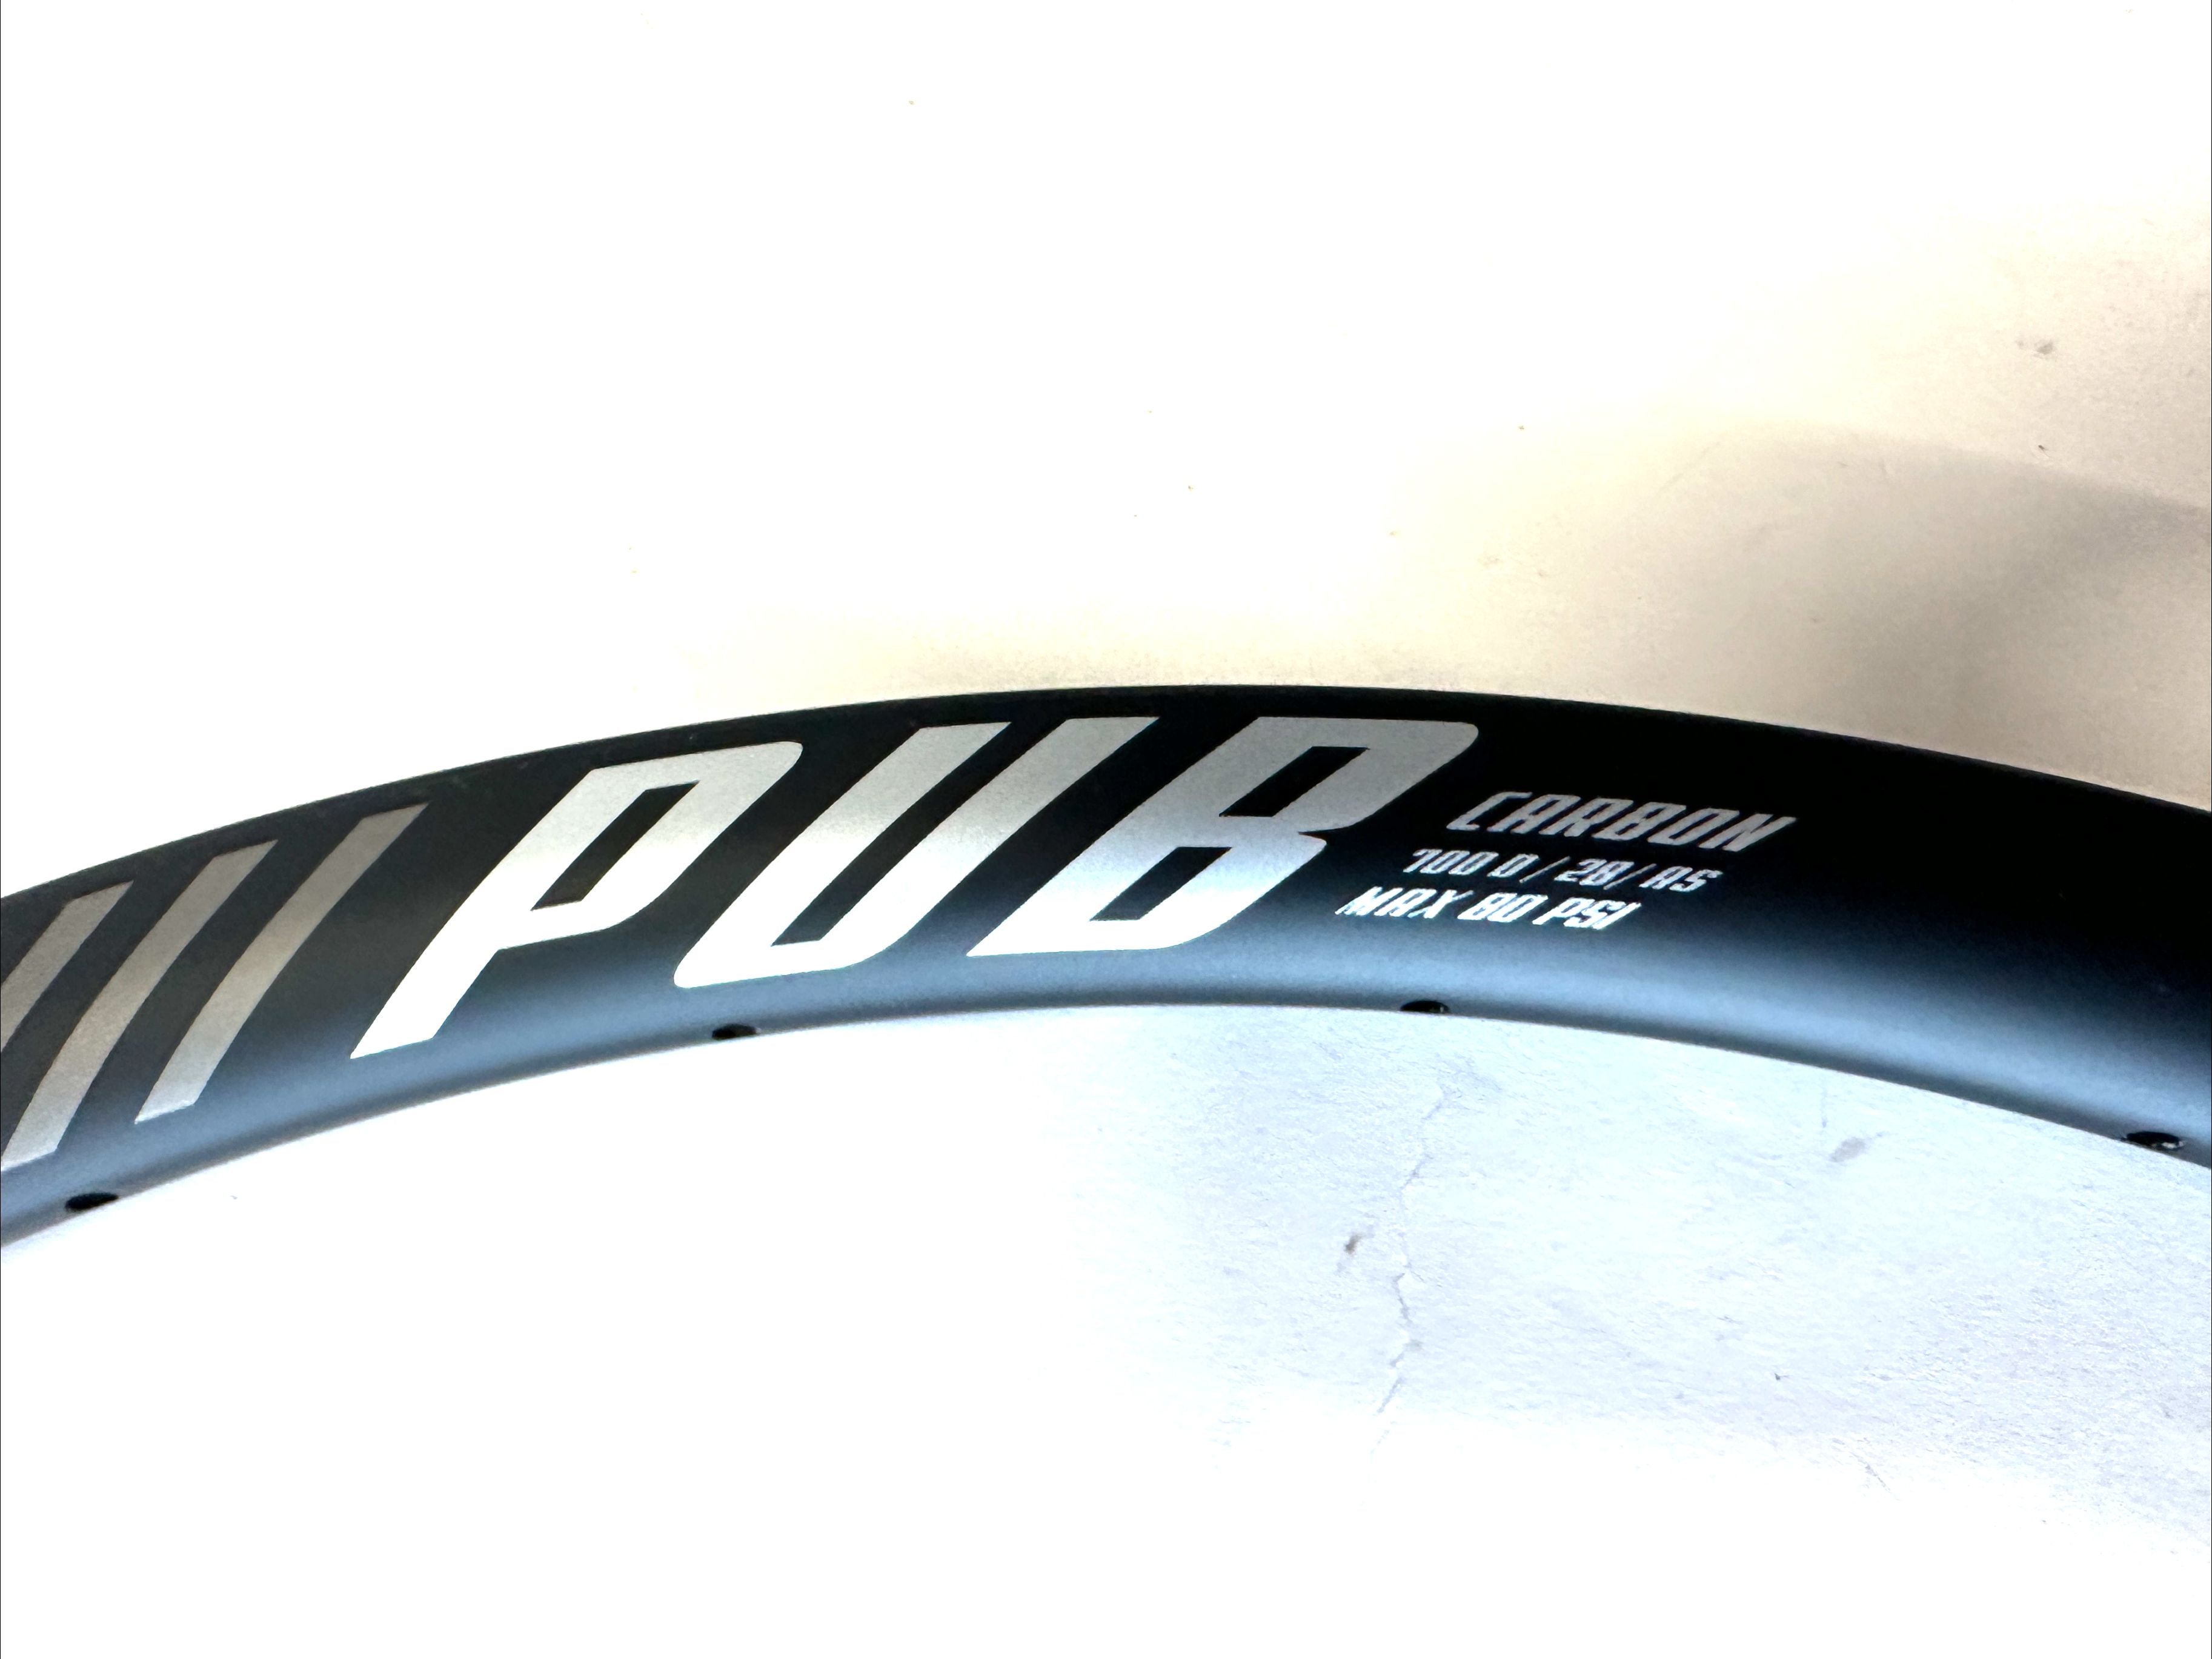 PUB GRAVEL 700D/28/AS Carbon Clincher Bike 80 PSI Wheel Rim Brakes 28 Spoke NEW